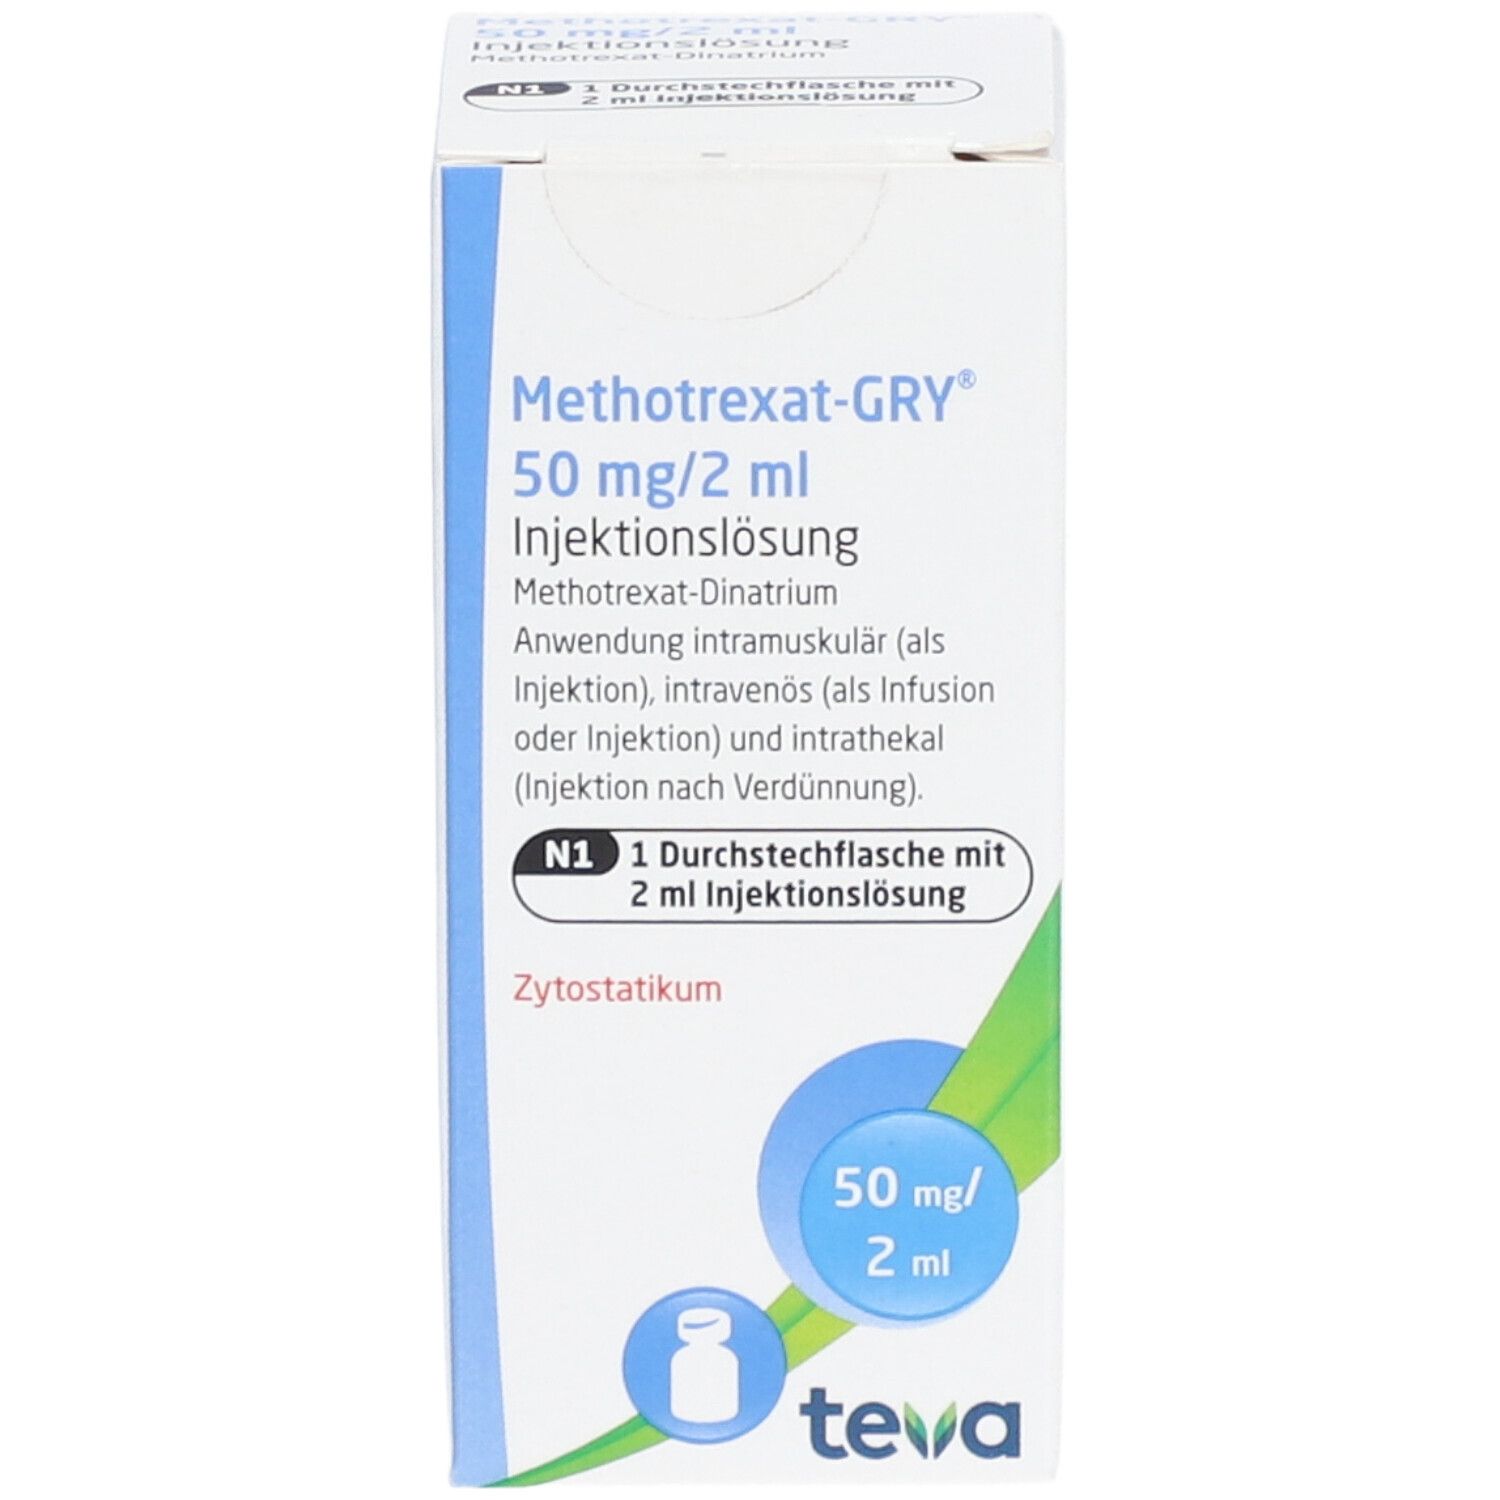 Methotrexat-GRY® 50 mg/2 ml